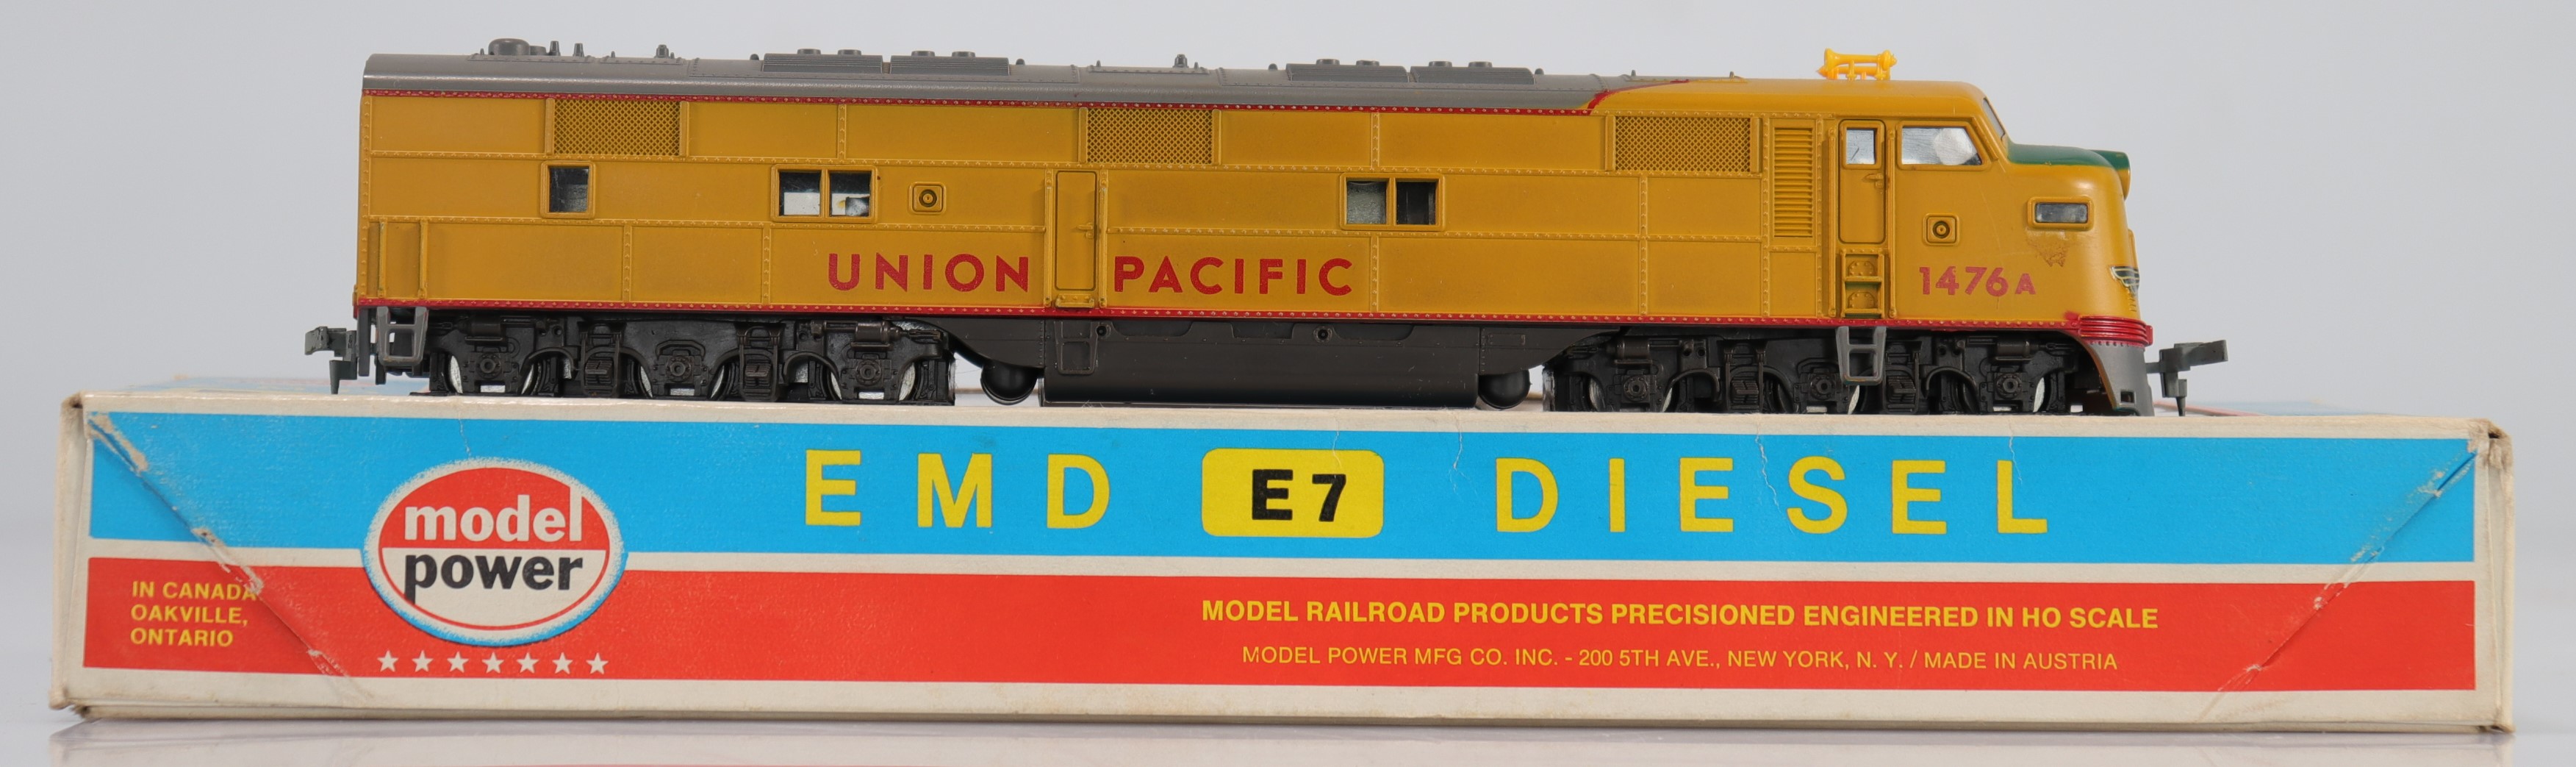 Locomotive Model Power / Reference: 914 / Type: EMD E7 Diesel (1476 A)